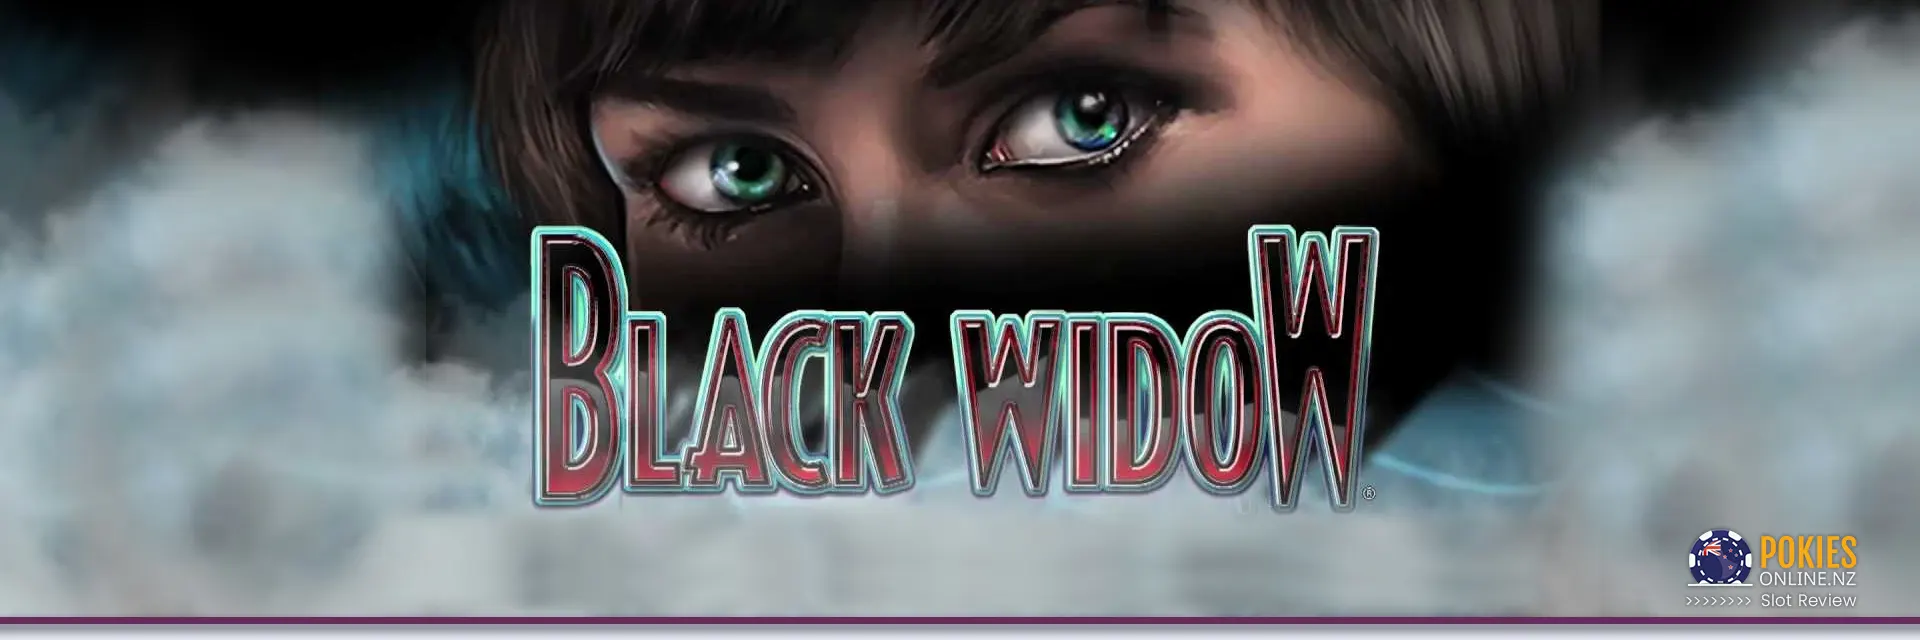 Black Widow slot banner